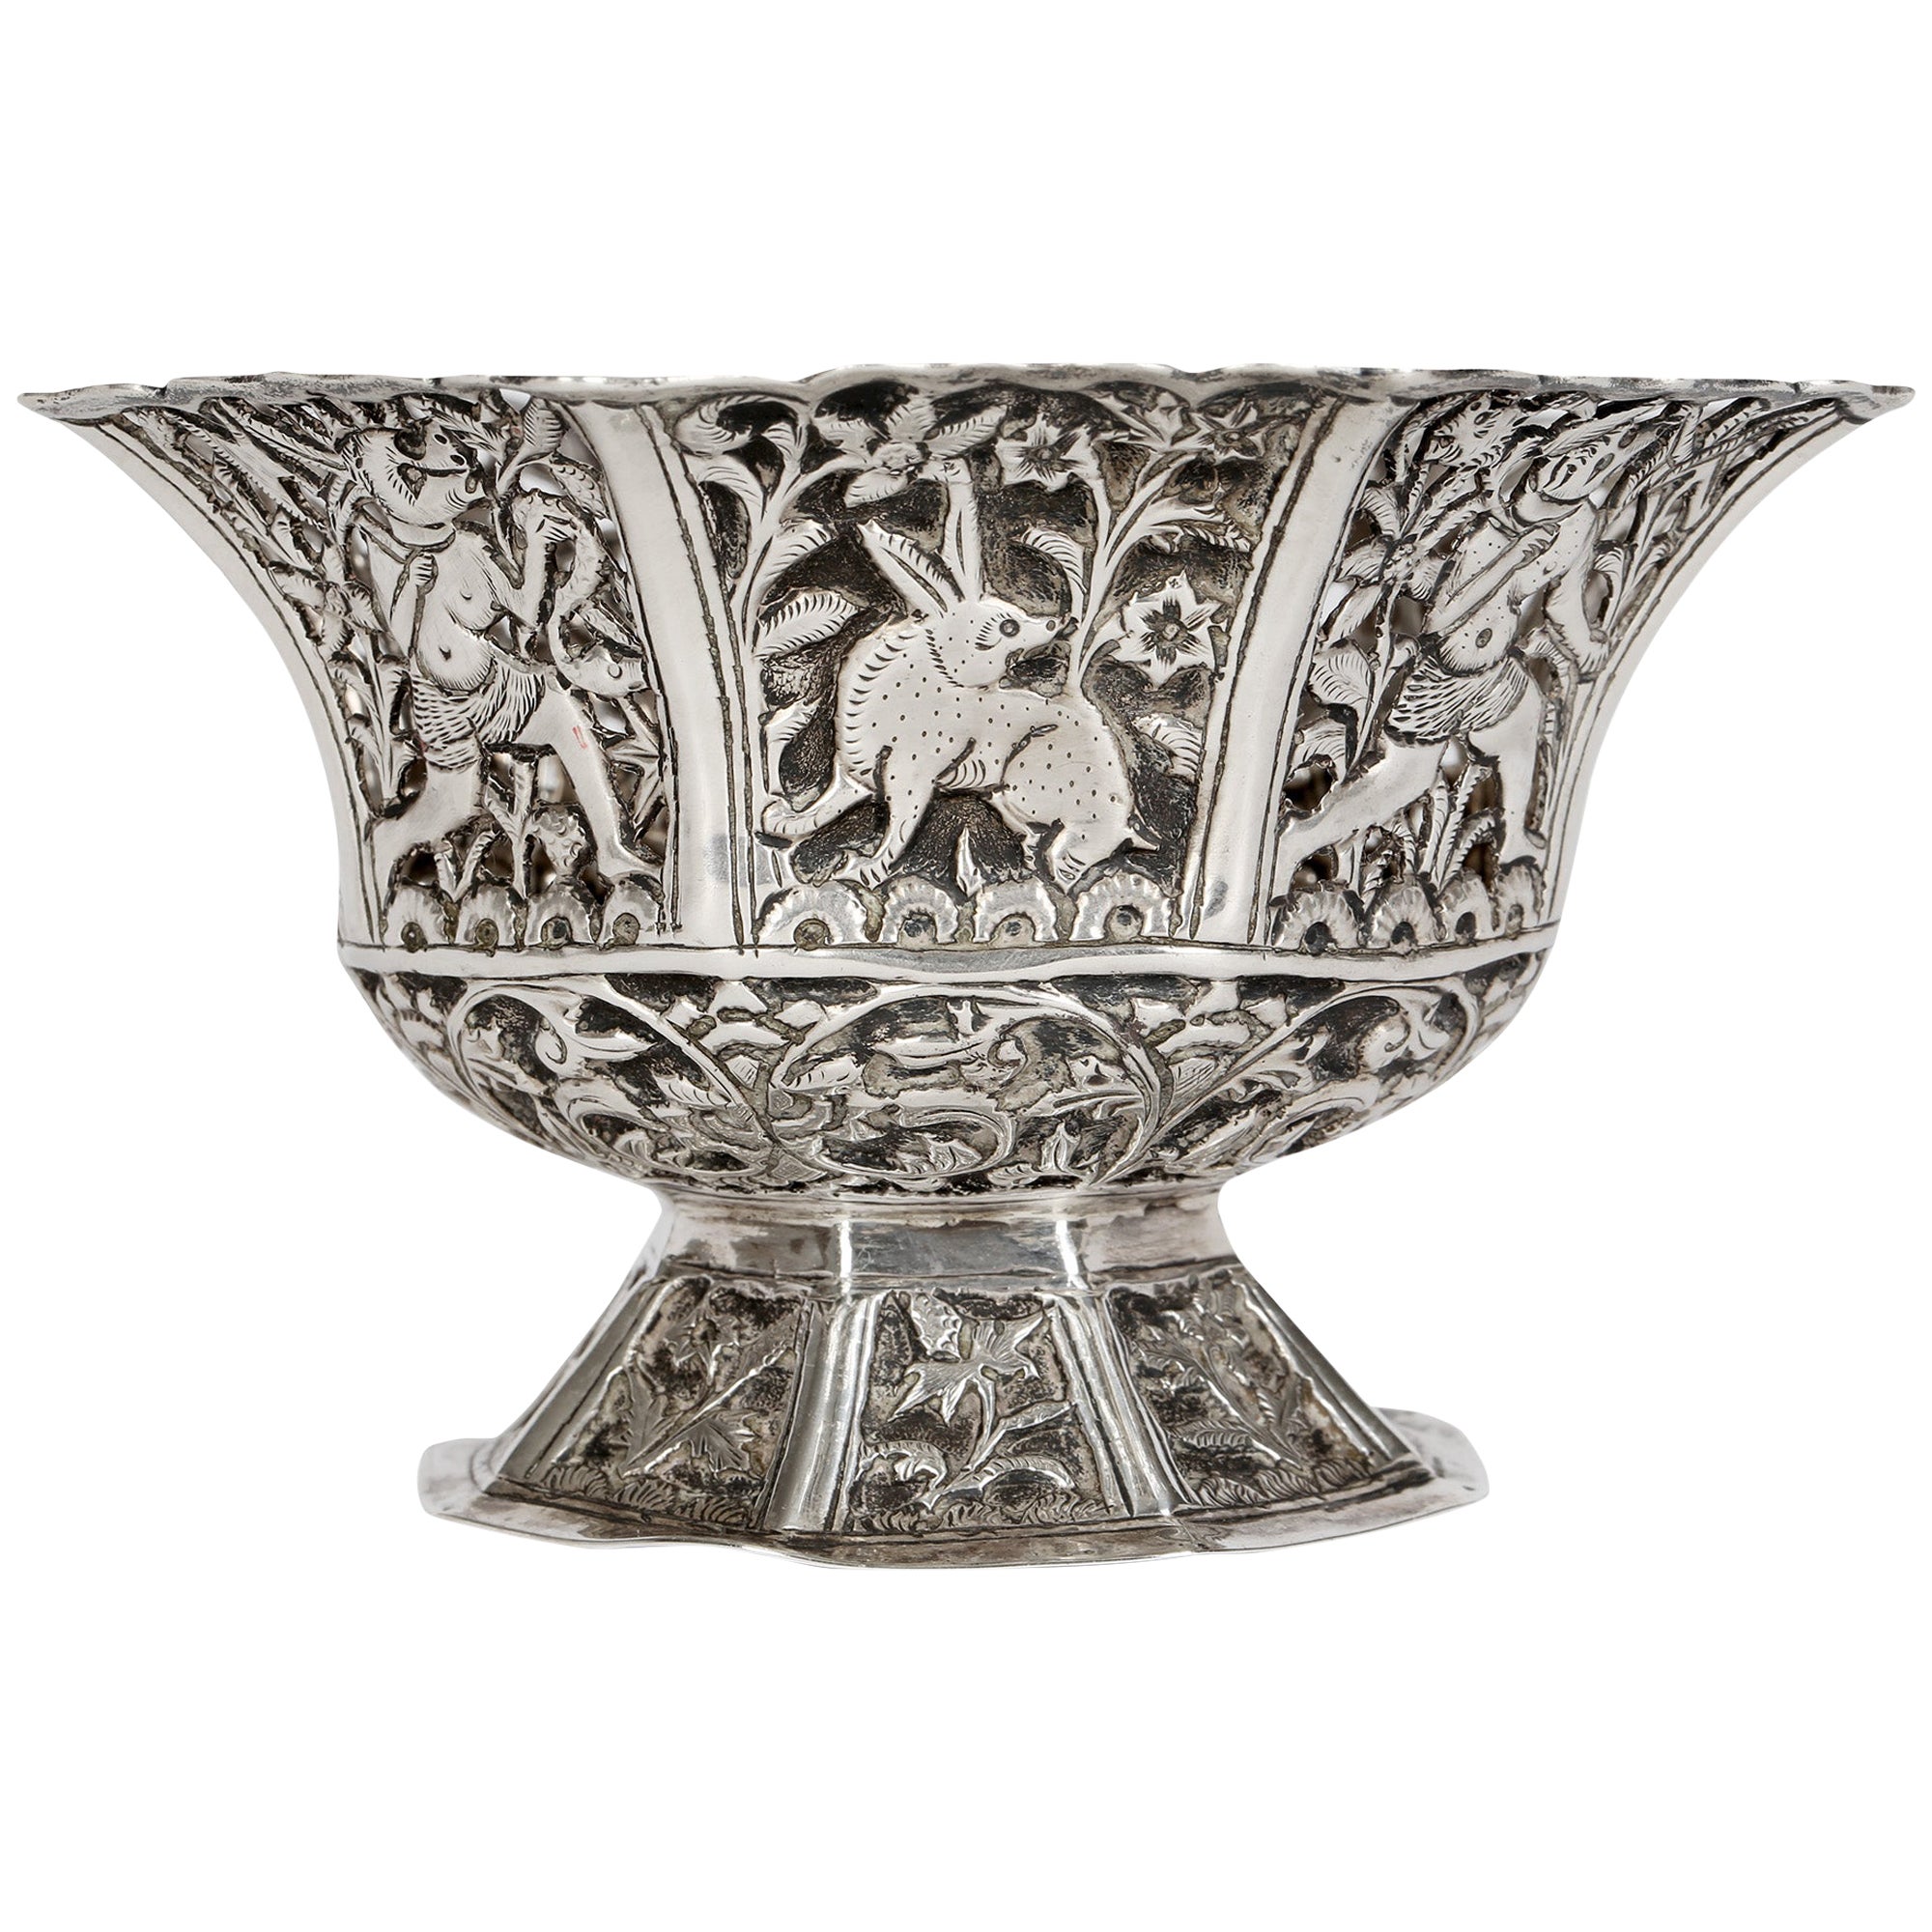 Indian Antique Silver Anthropomorphic Design Bowl with Animals